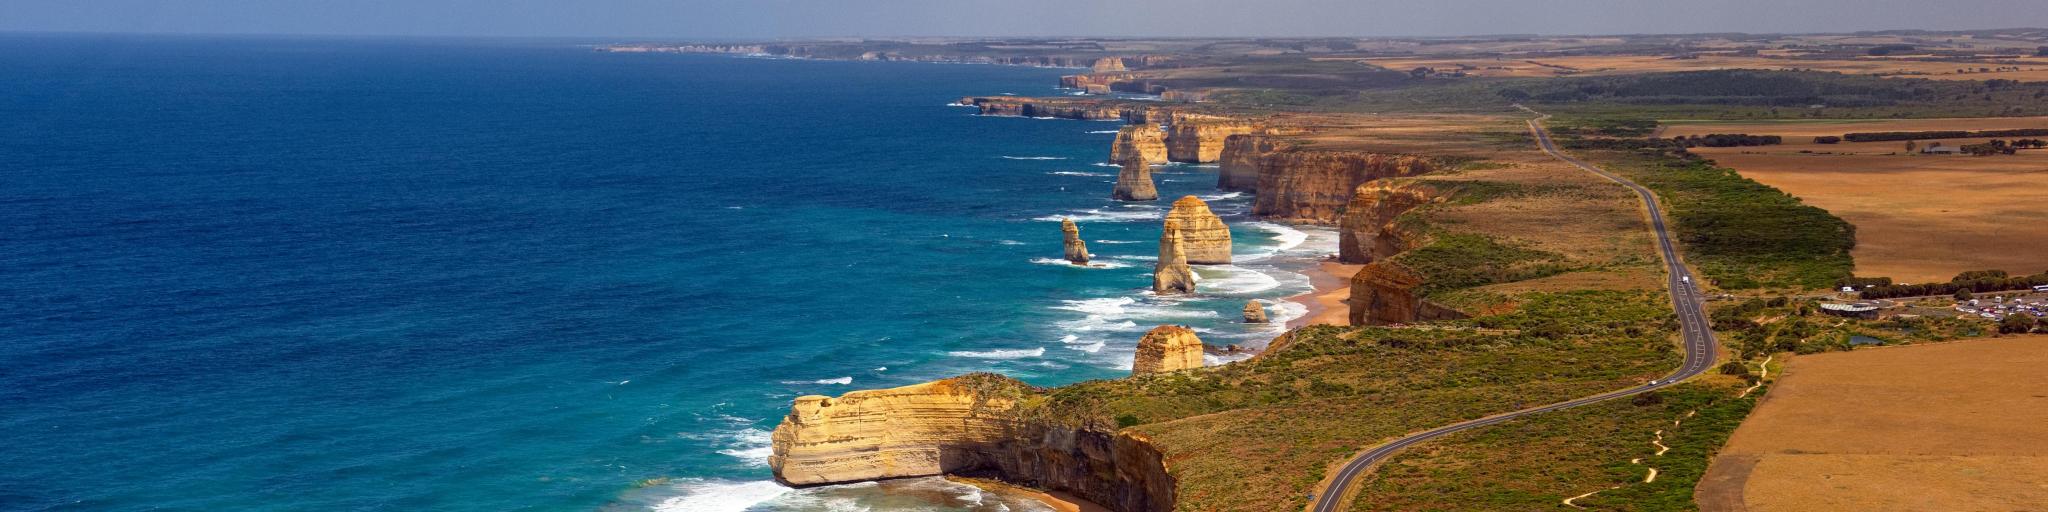 Aerial view across the Great Ocean Road and 12 Apostles against striking coastline, Australia